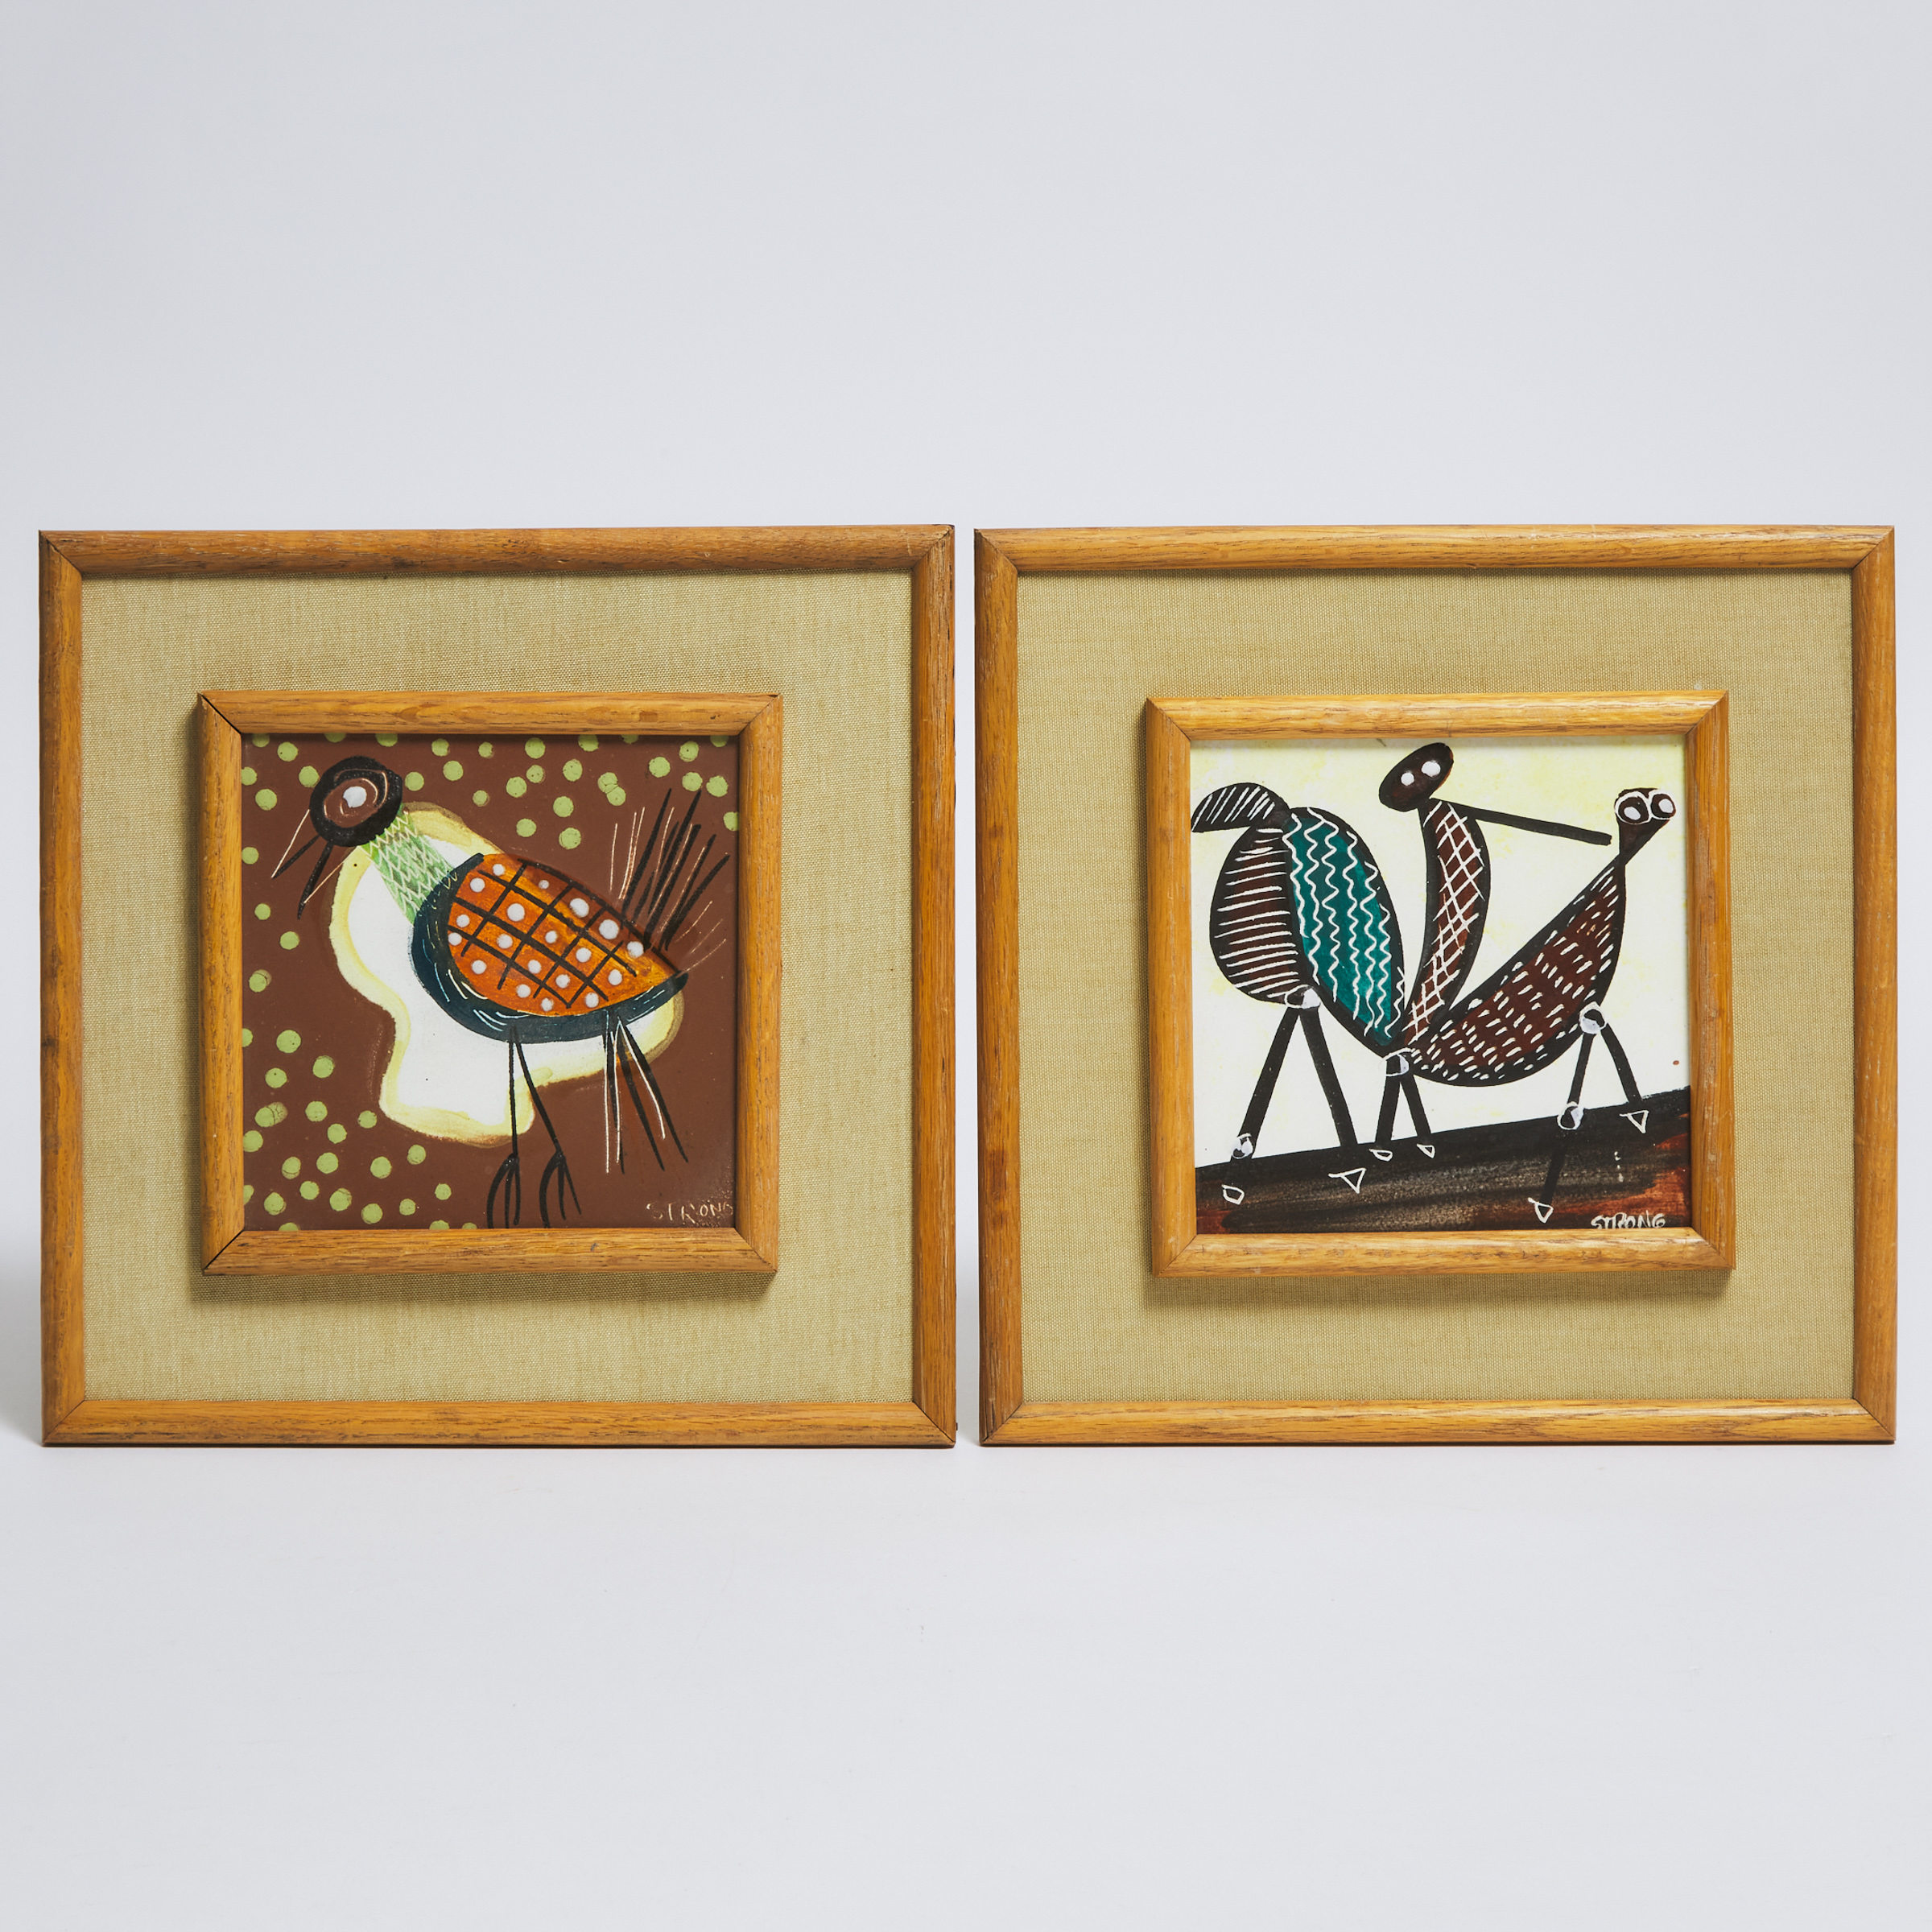 Harris Strong (American 1920-2006), Two Ceramic Tiles, c.1960